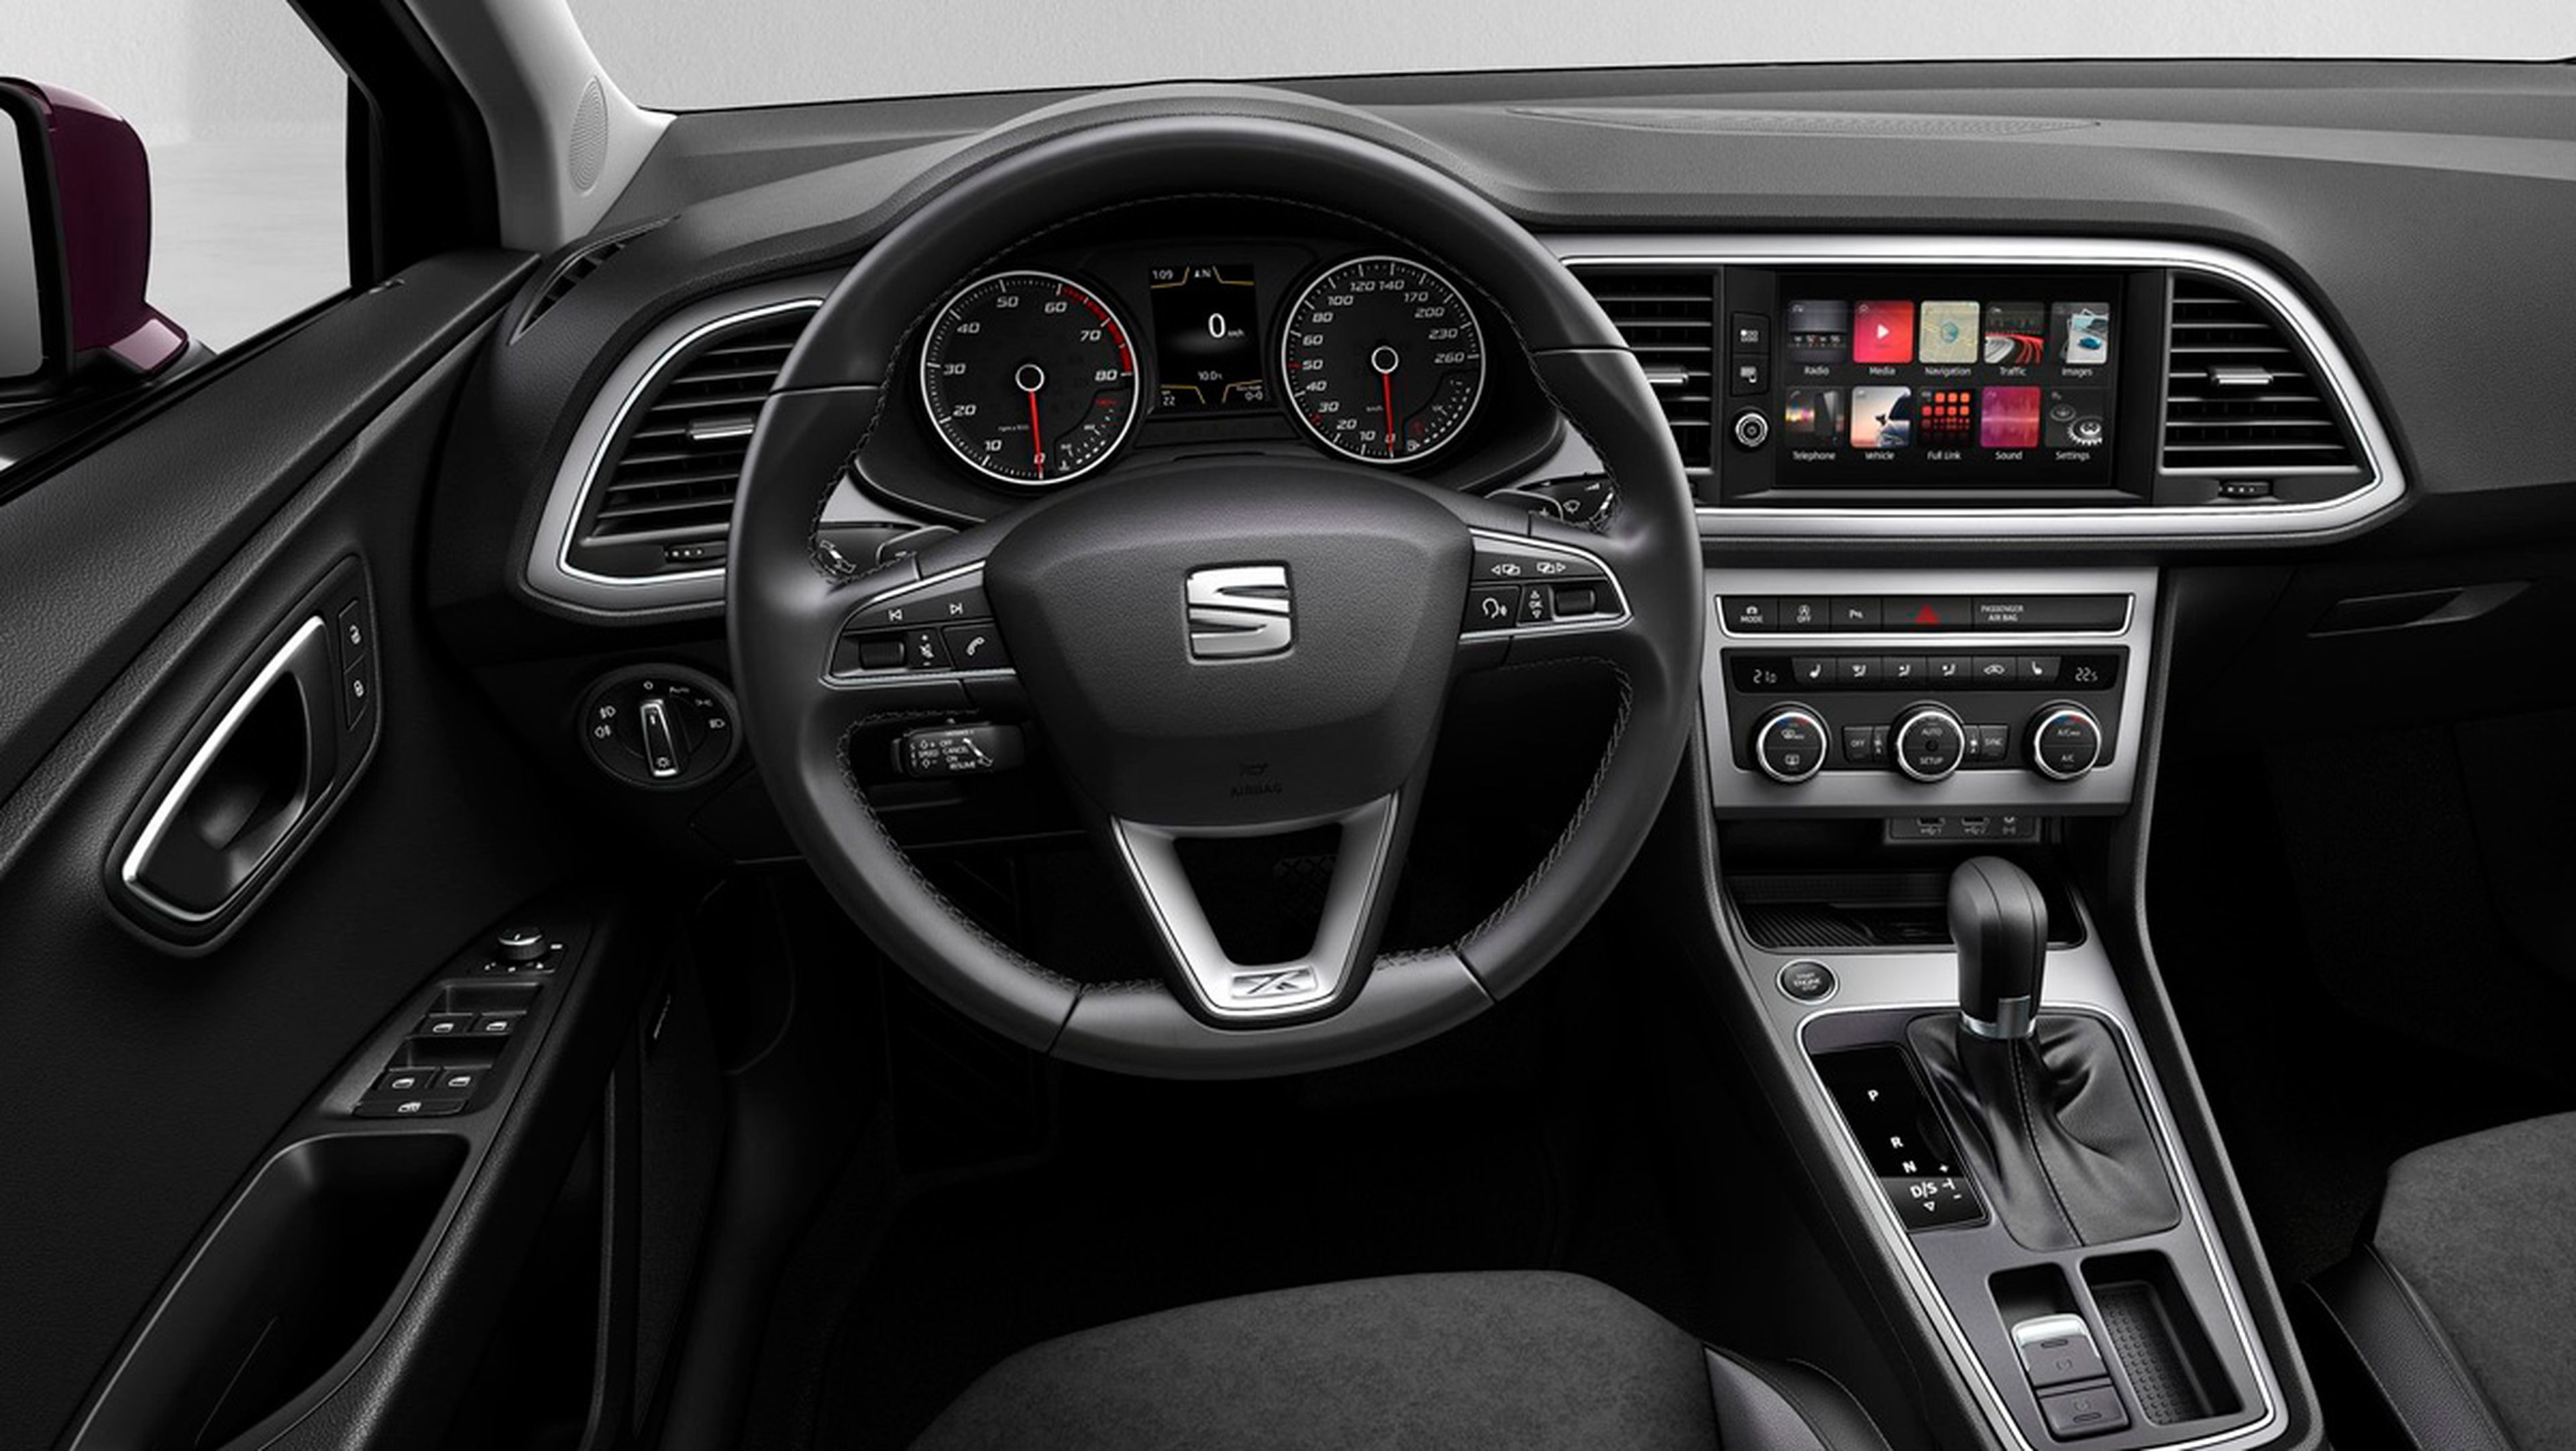 Seat León ST (interior)